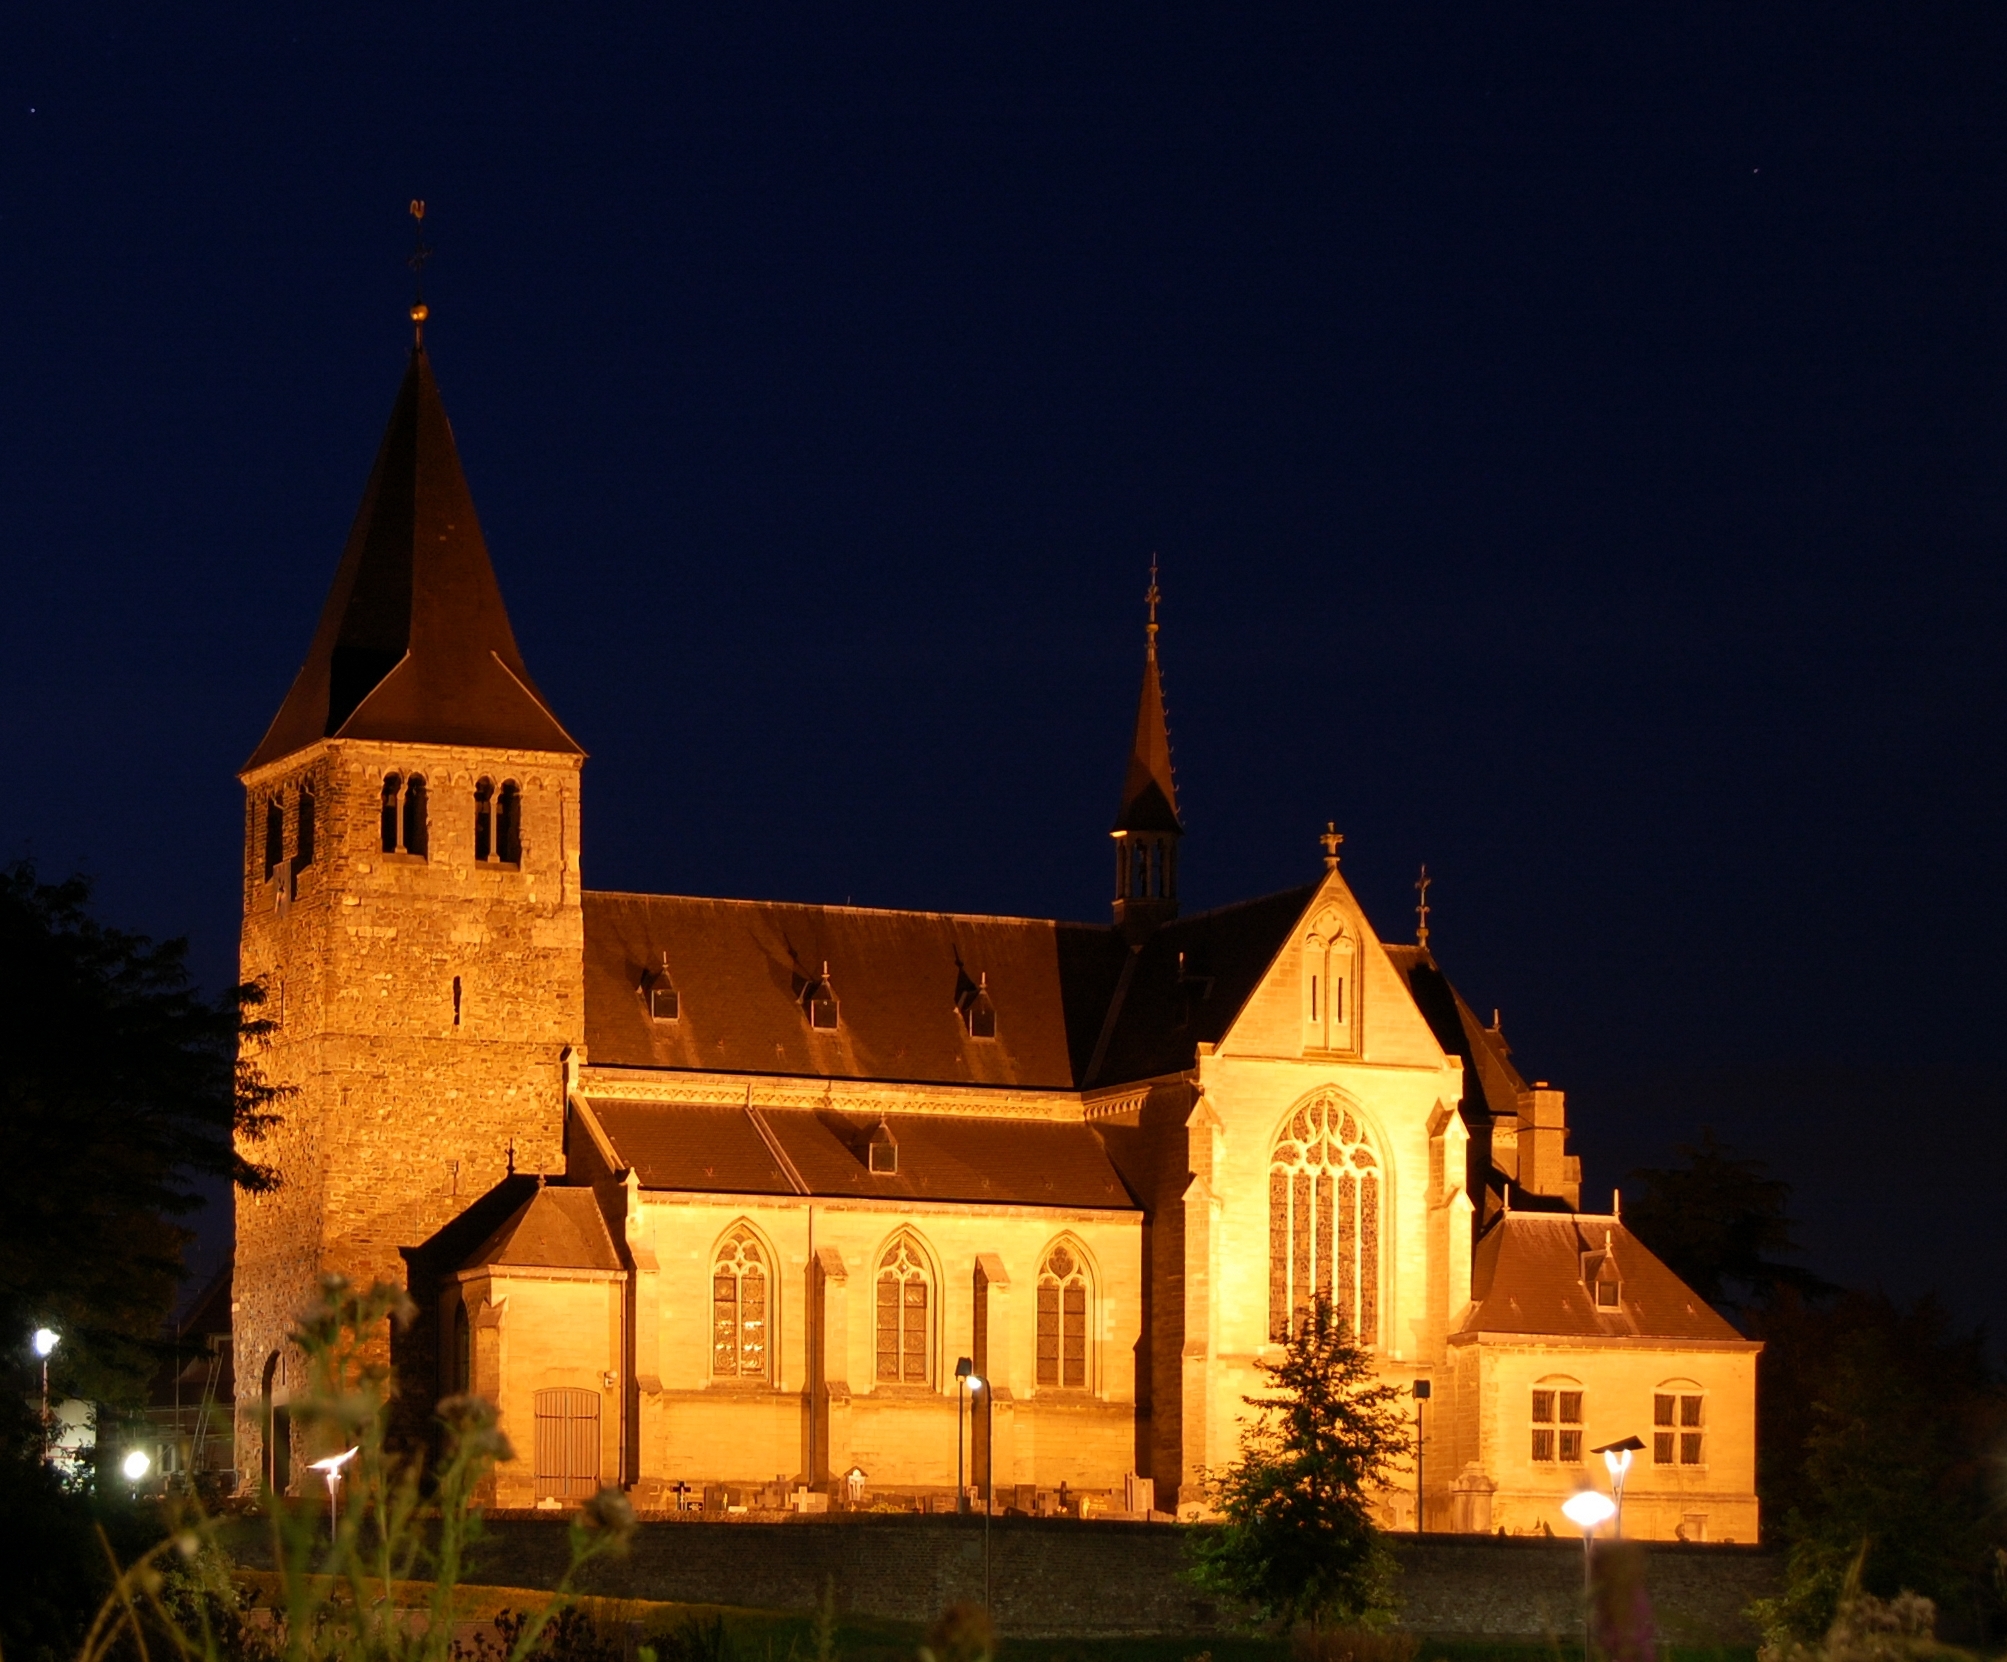 File:Church Heel by night.jpg - Wikimedia Commons